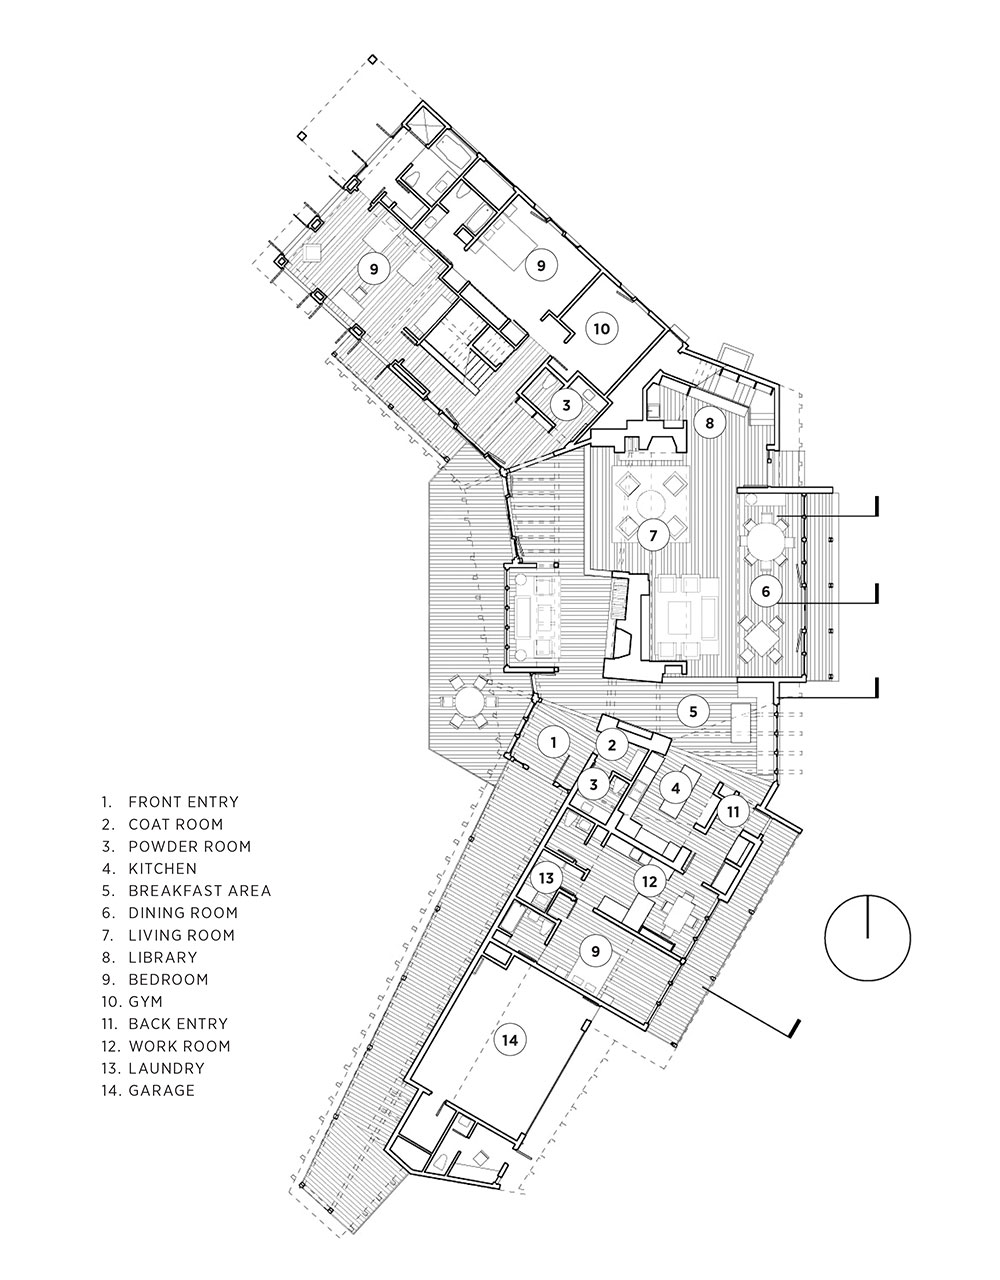 Diagram of Malibu Ranch floorplan